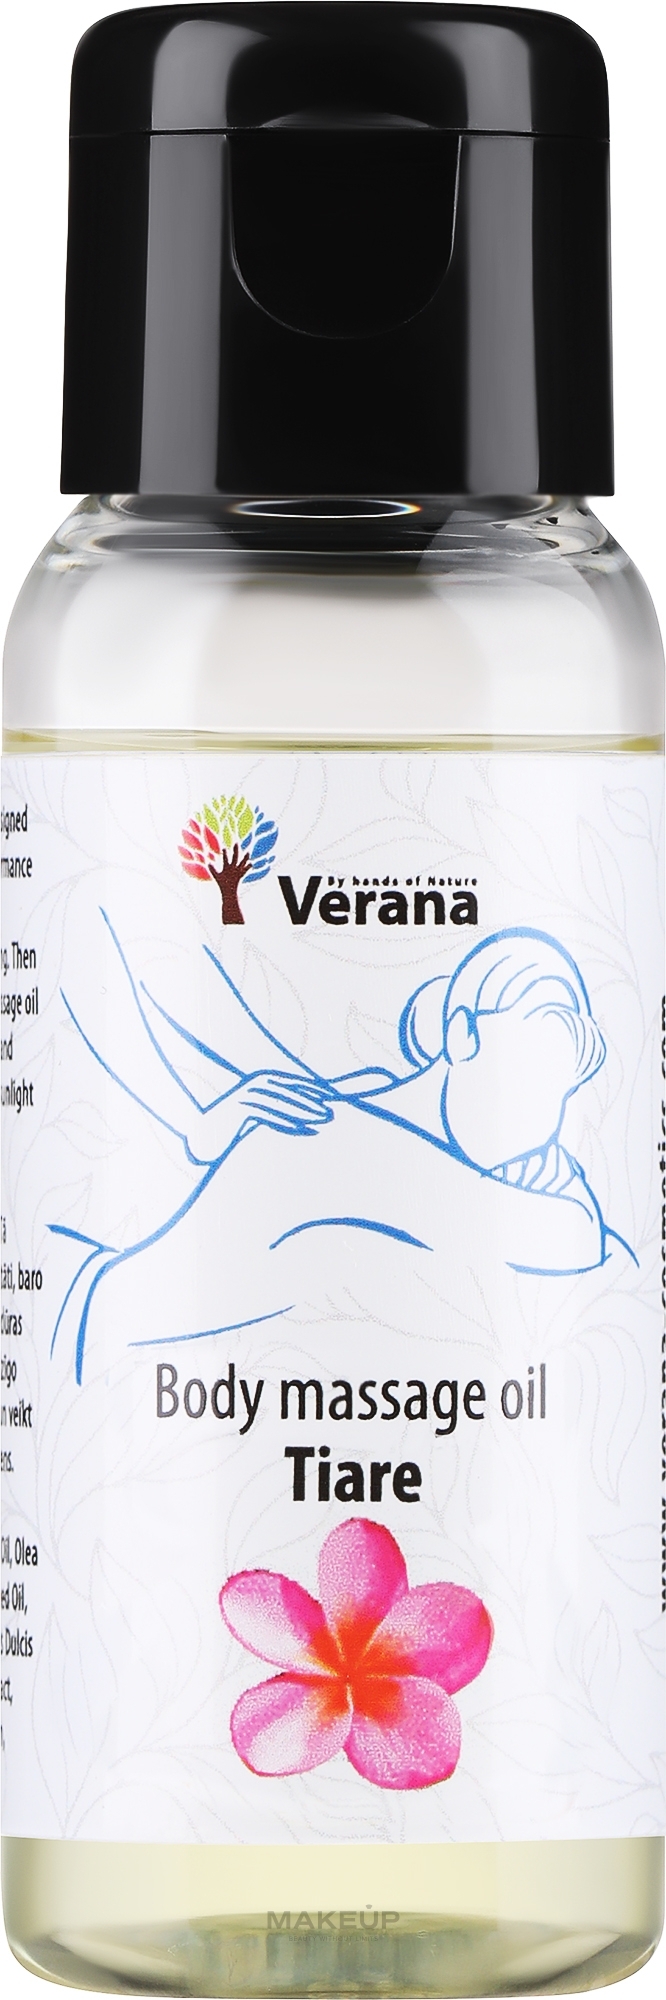 Tiare Flower Body Massage Oil - Verana Body Massage Oil — photo 30 ml